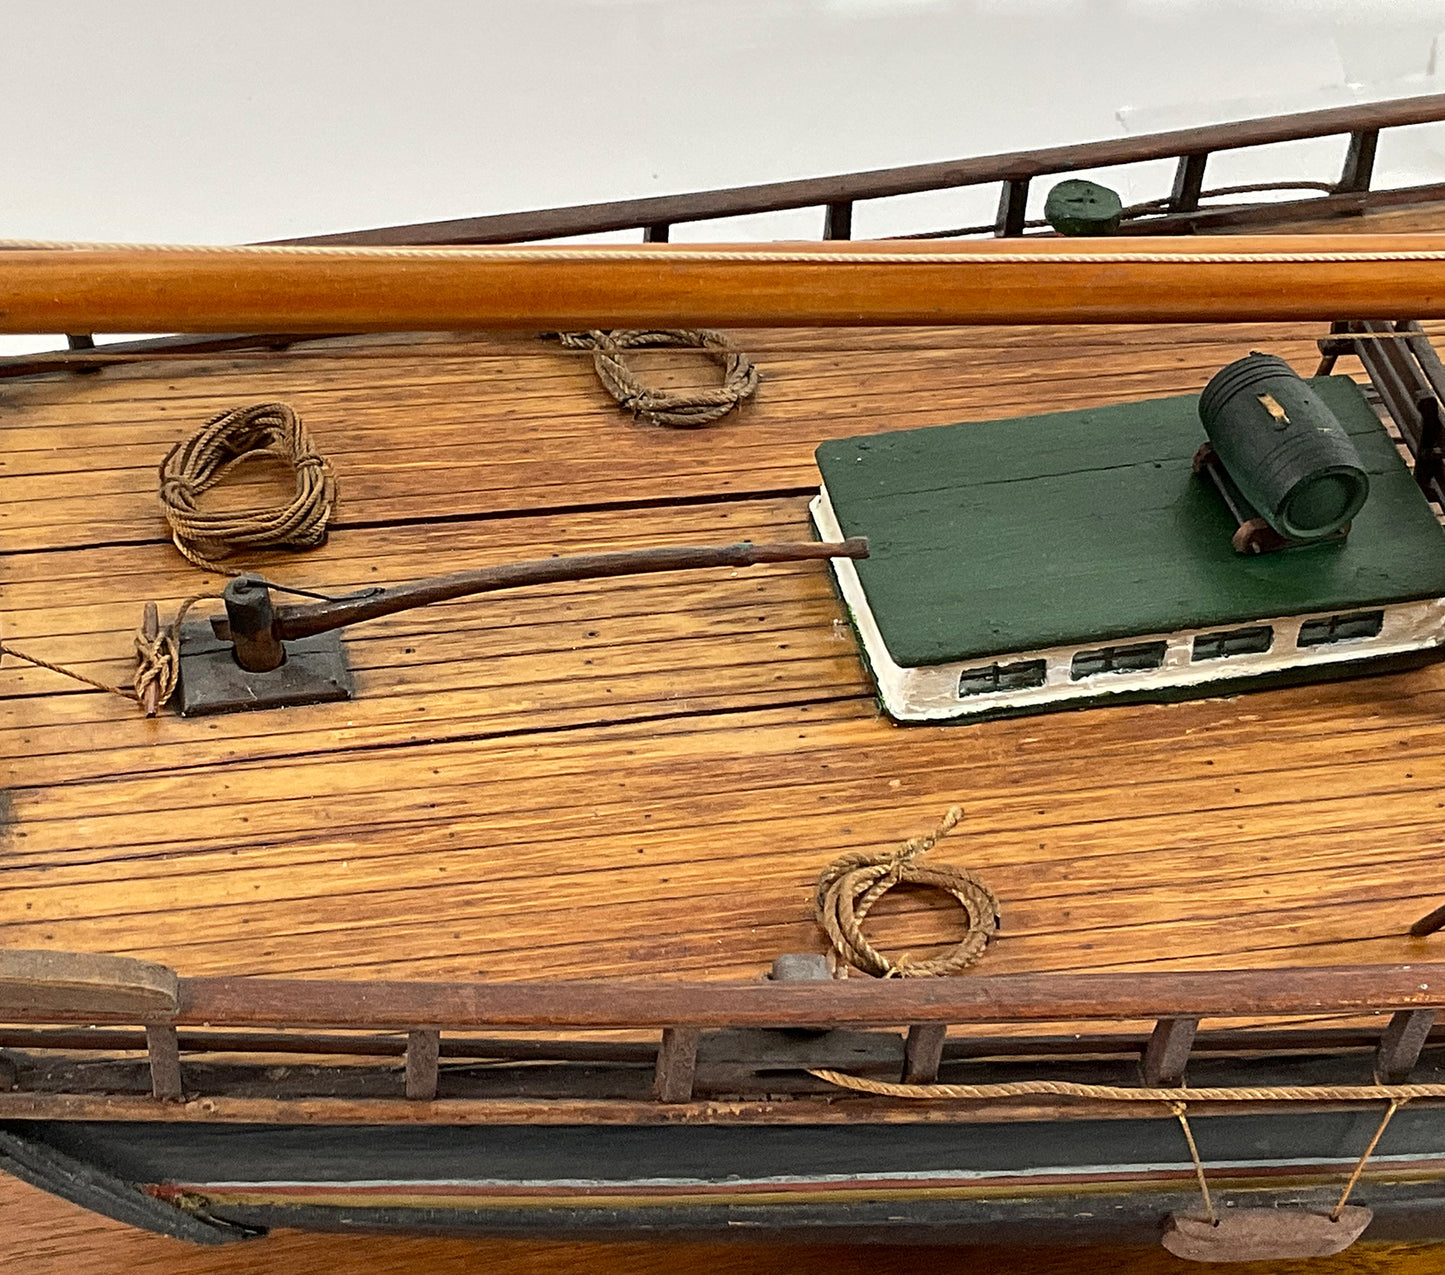 Ship Model "Hudson River Sloop Illinois" - Lannan Gallery